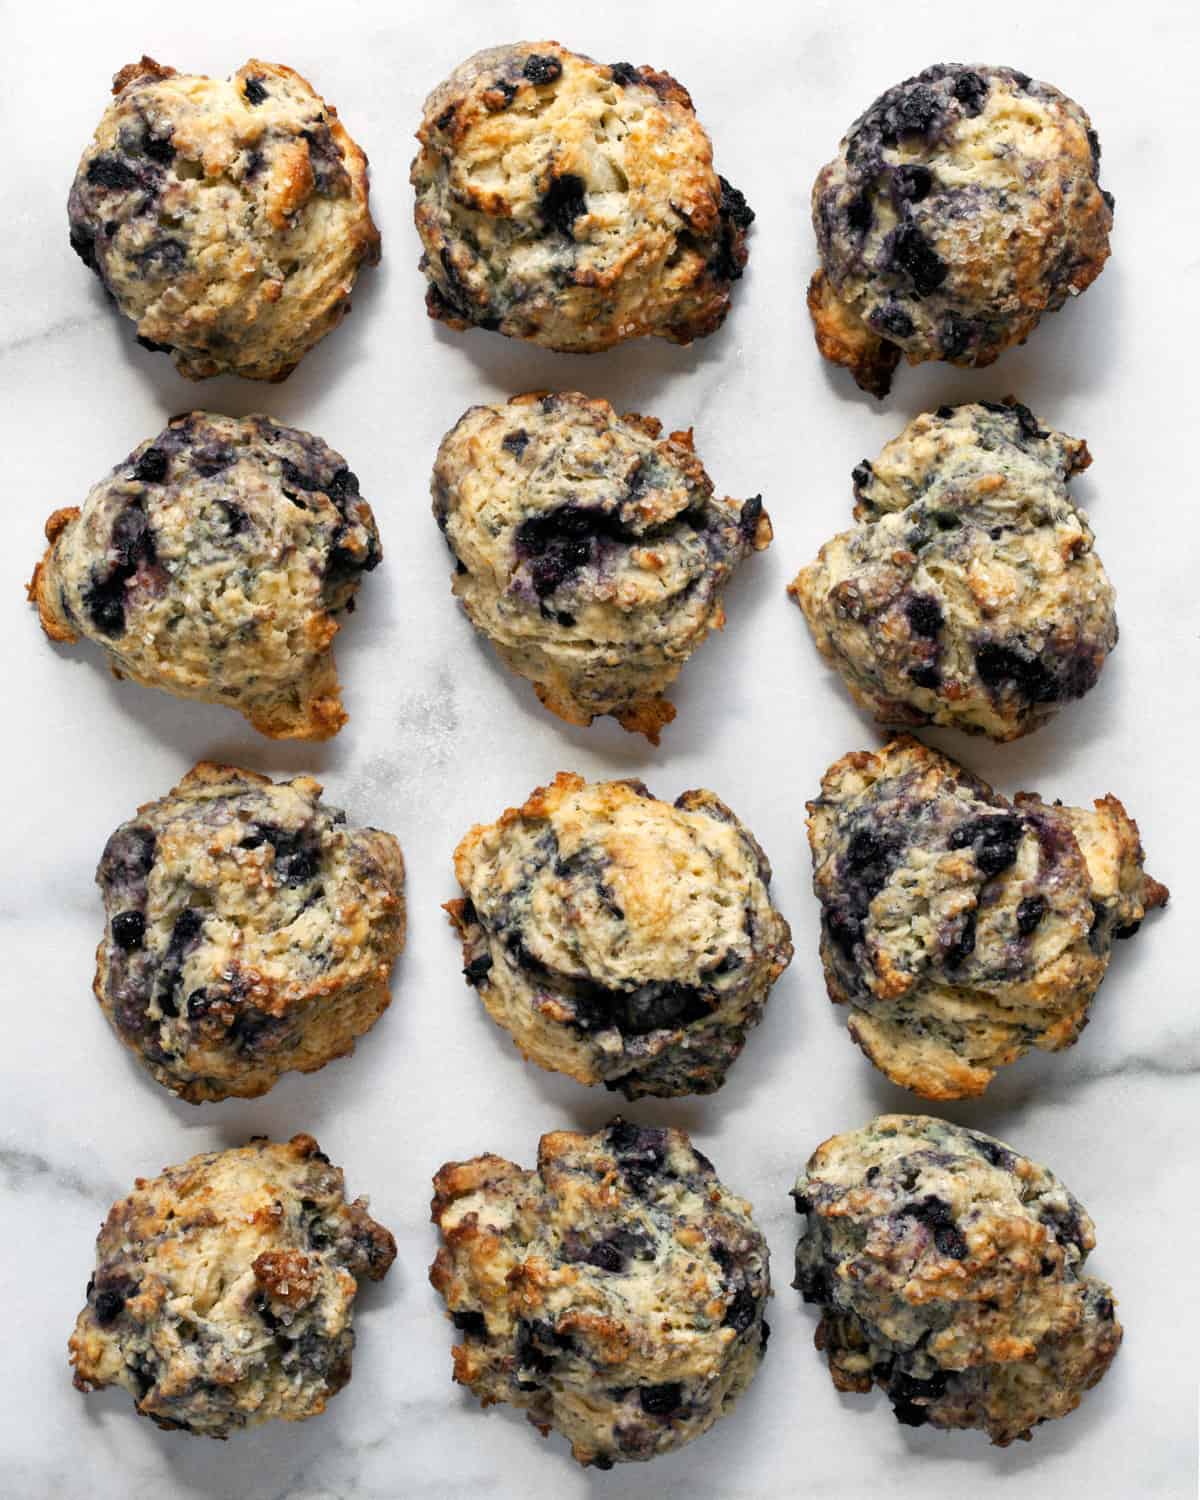 4 rows of blueberry scones.